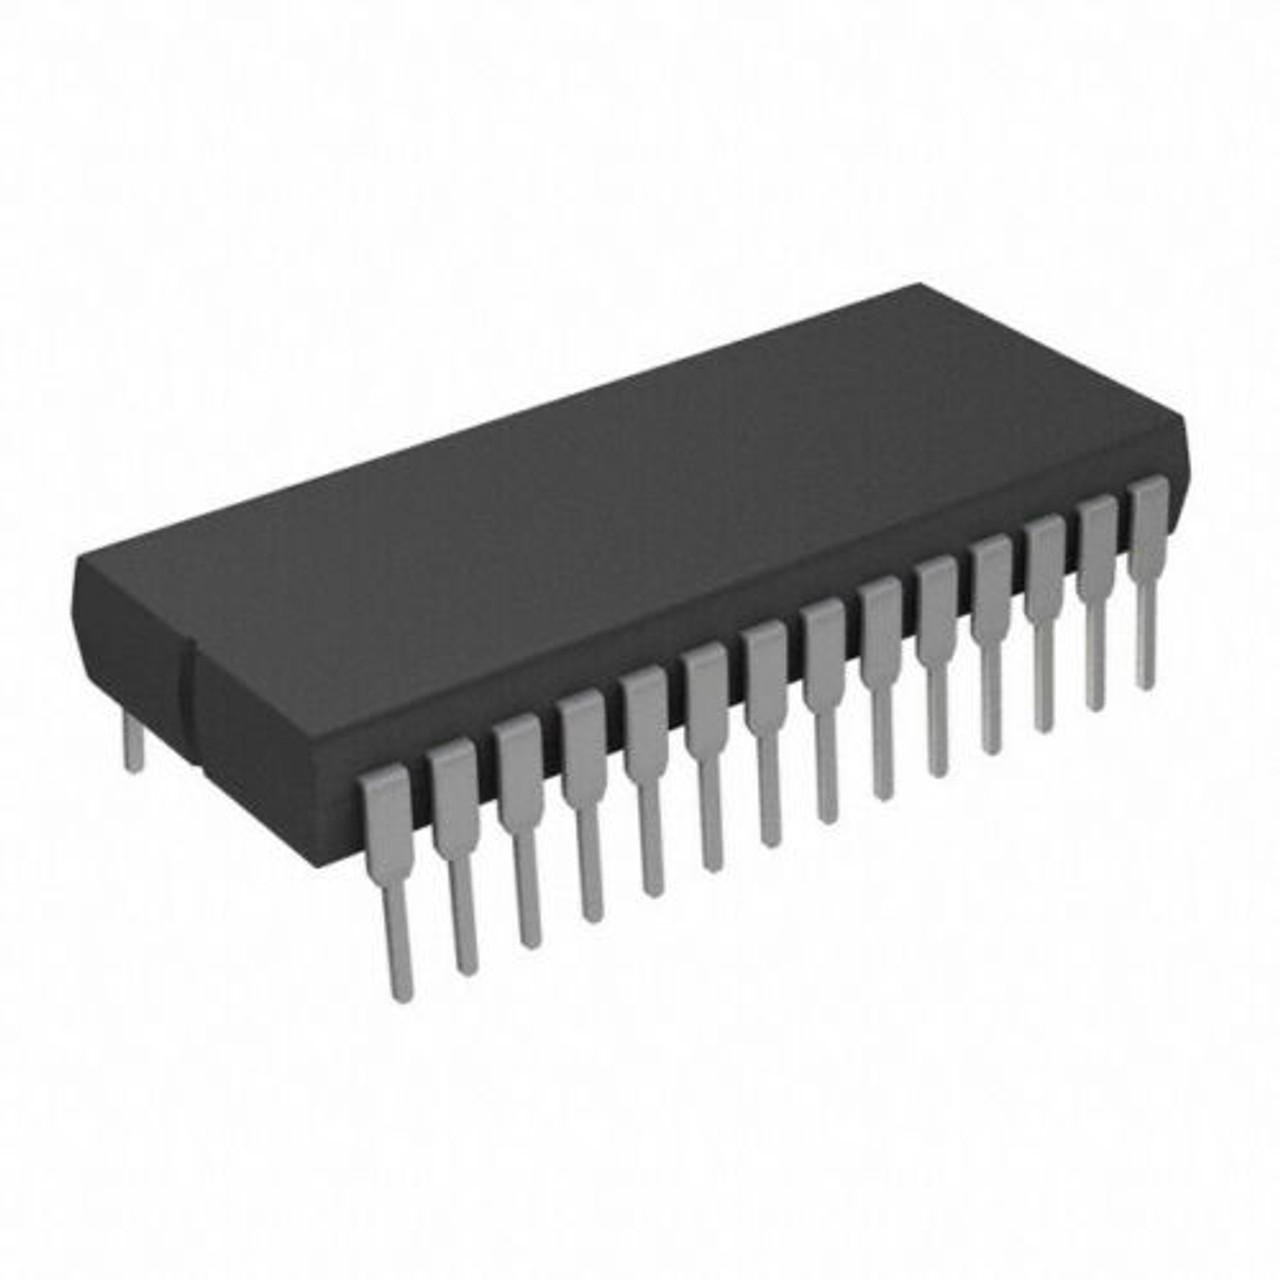 MC68A54P ; Advanced DATA Link Controller, DIP-28-W